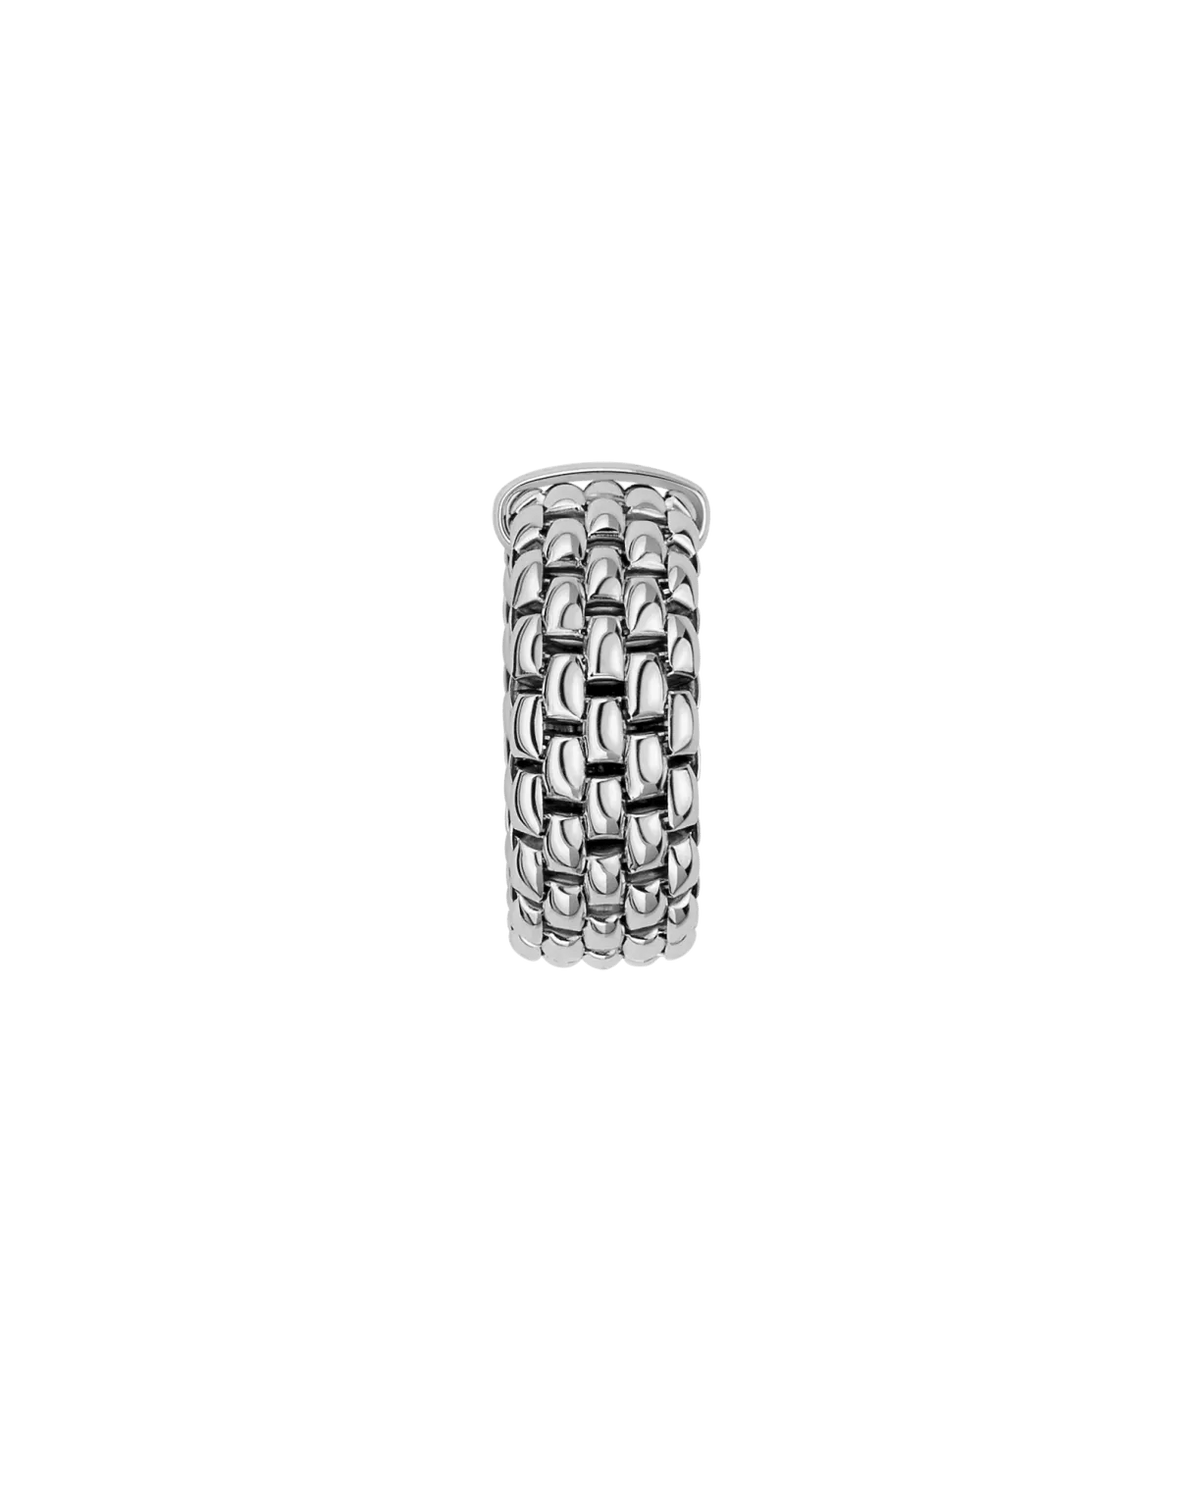 Flex’It White Gold Ring - Aurum Jewels